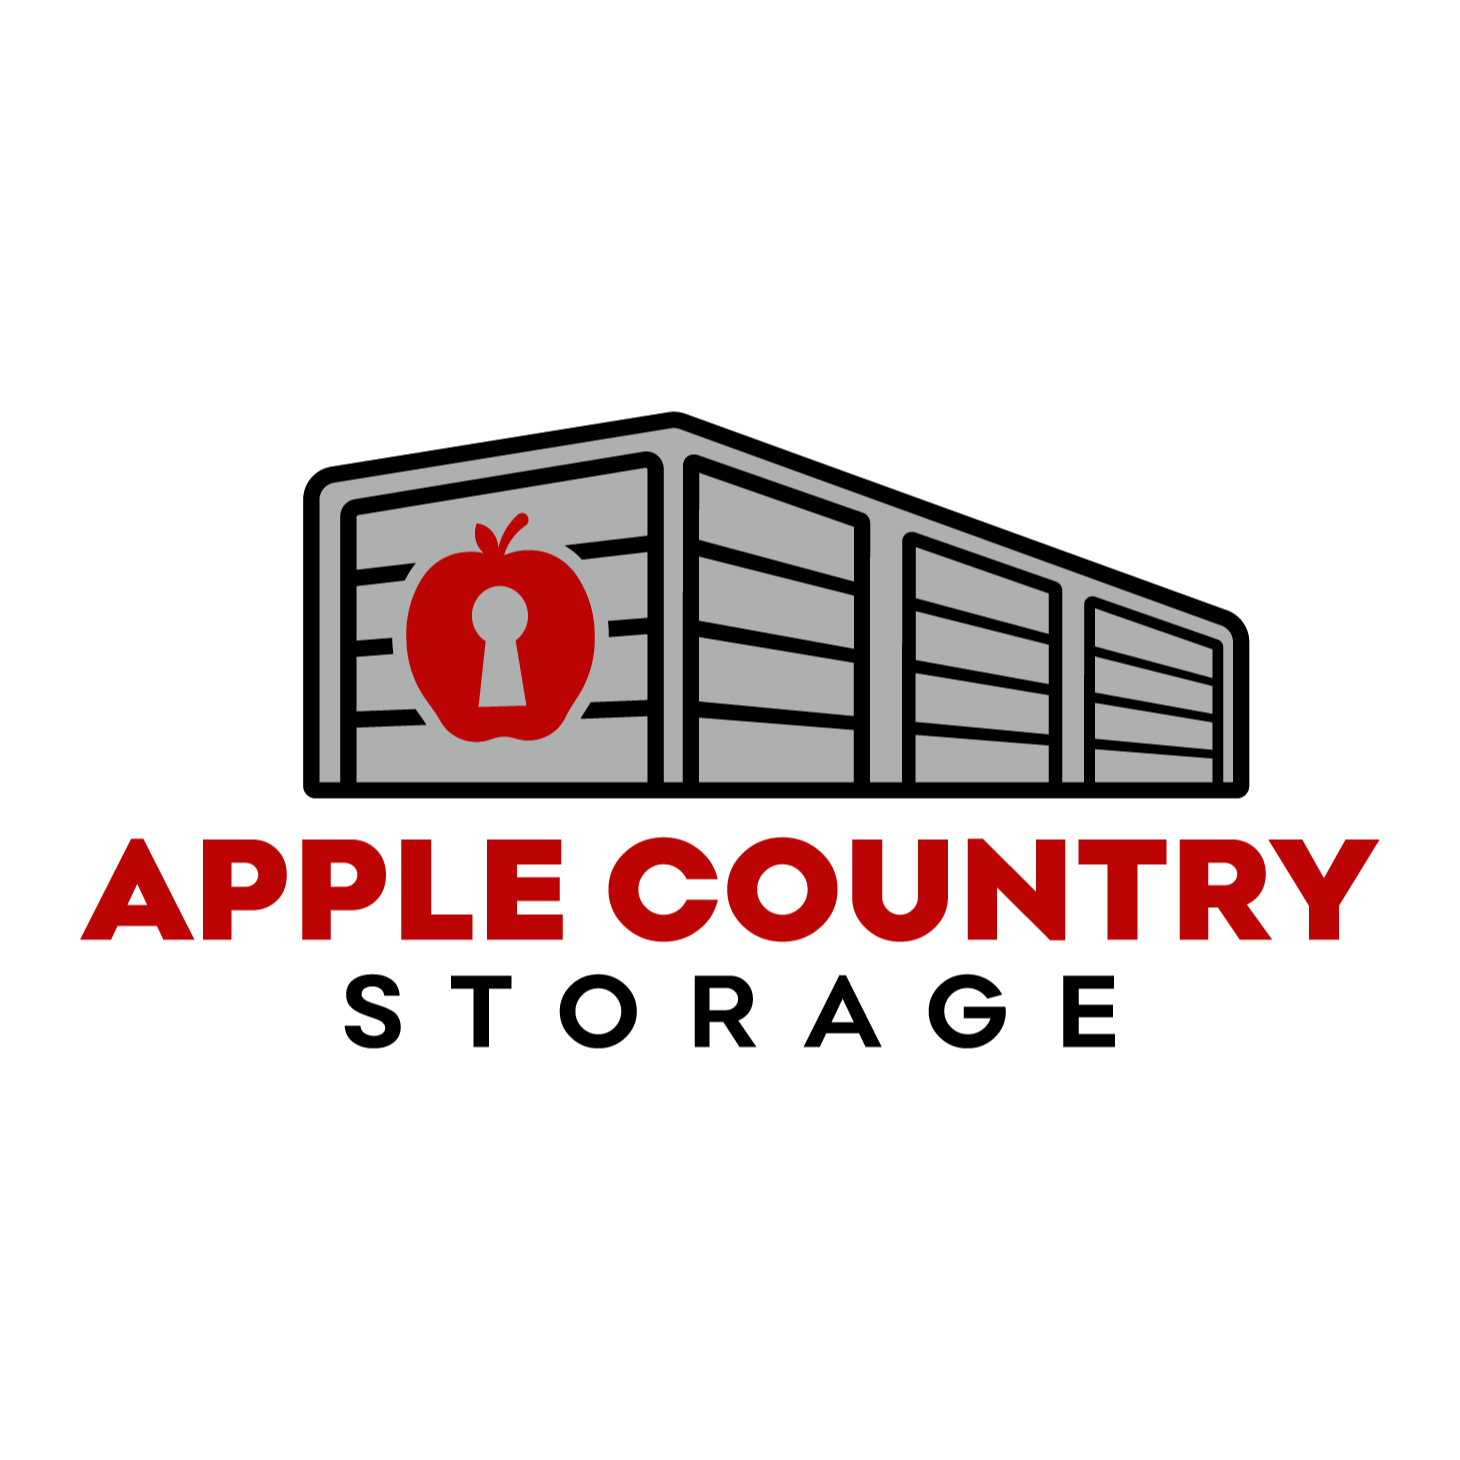 Apple Country Storage - Hilton, NY 14468 - (585)414-2080 | ShowMeLocal.com